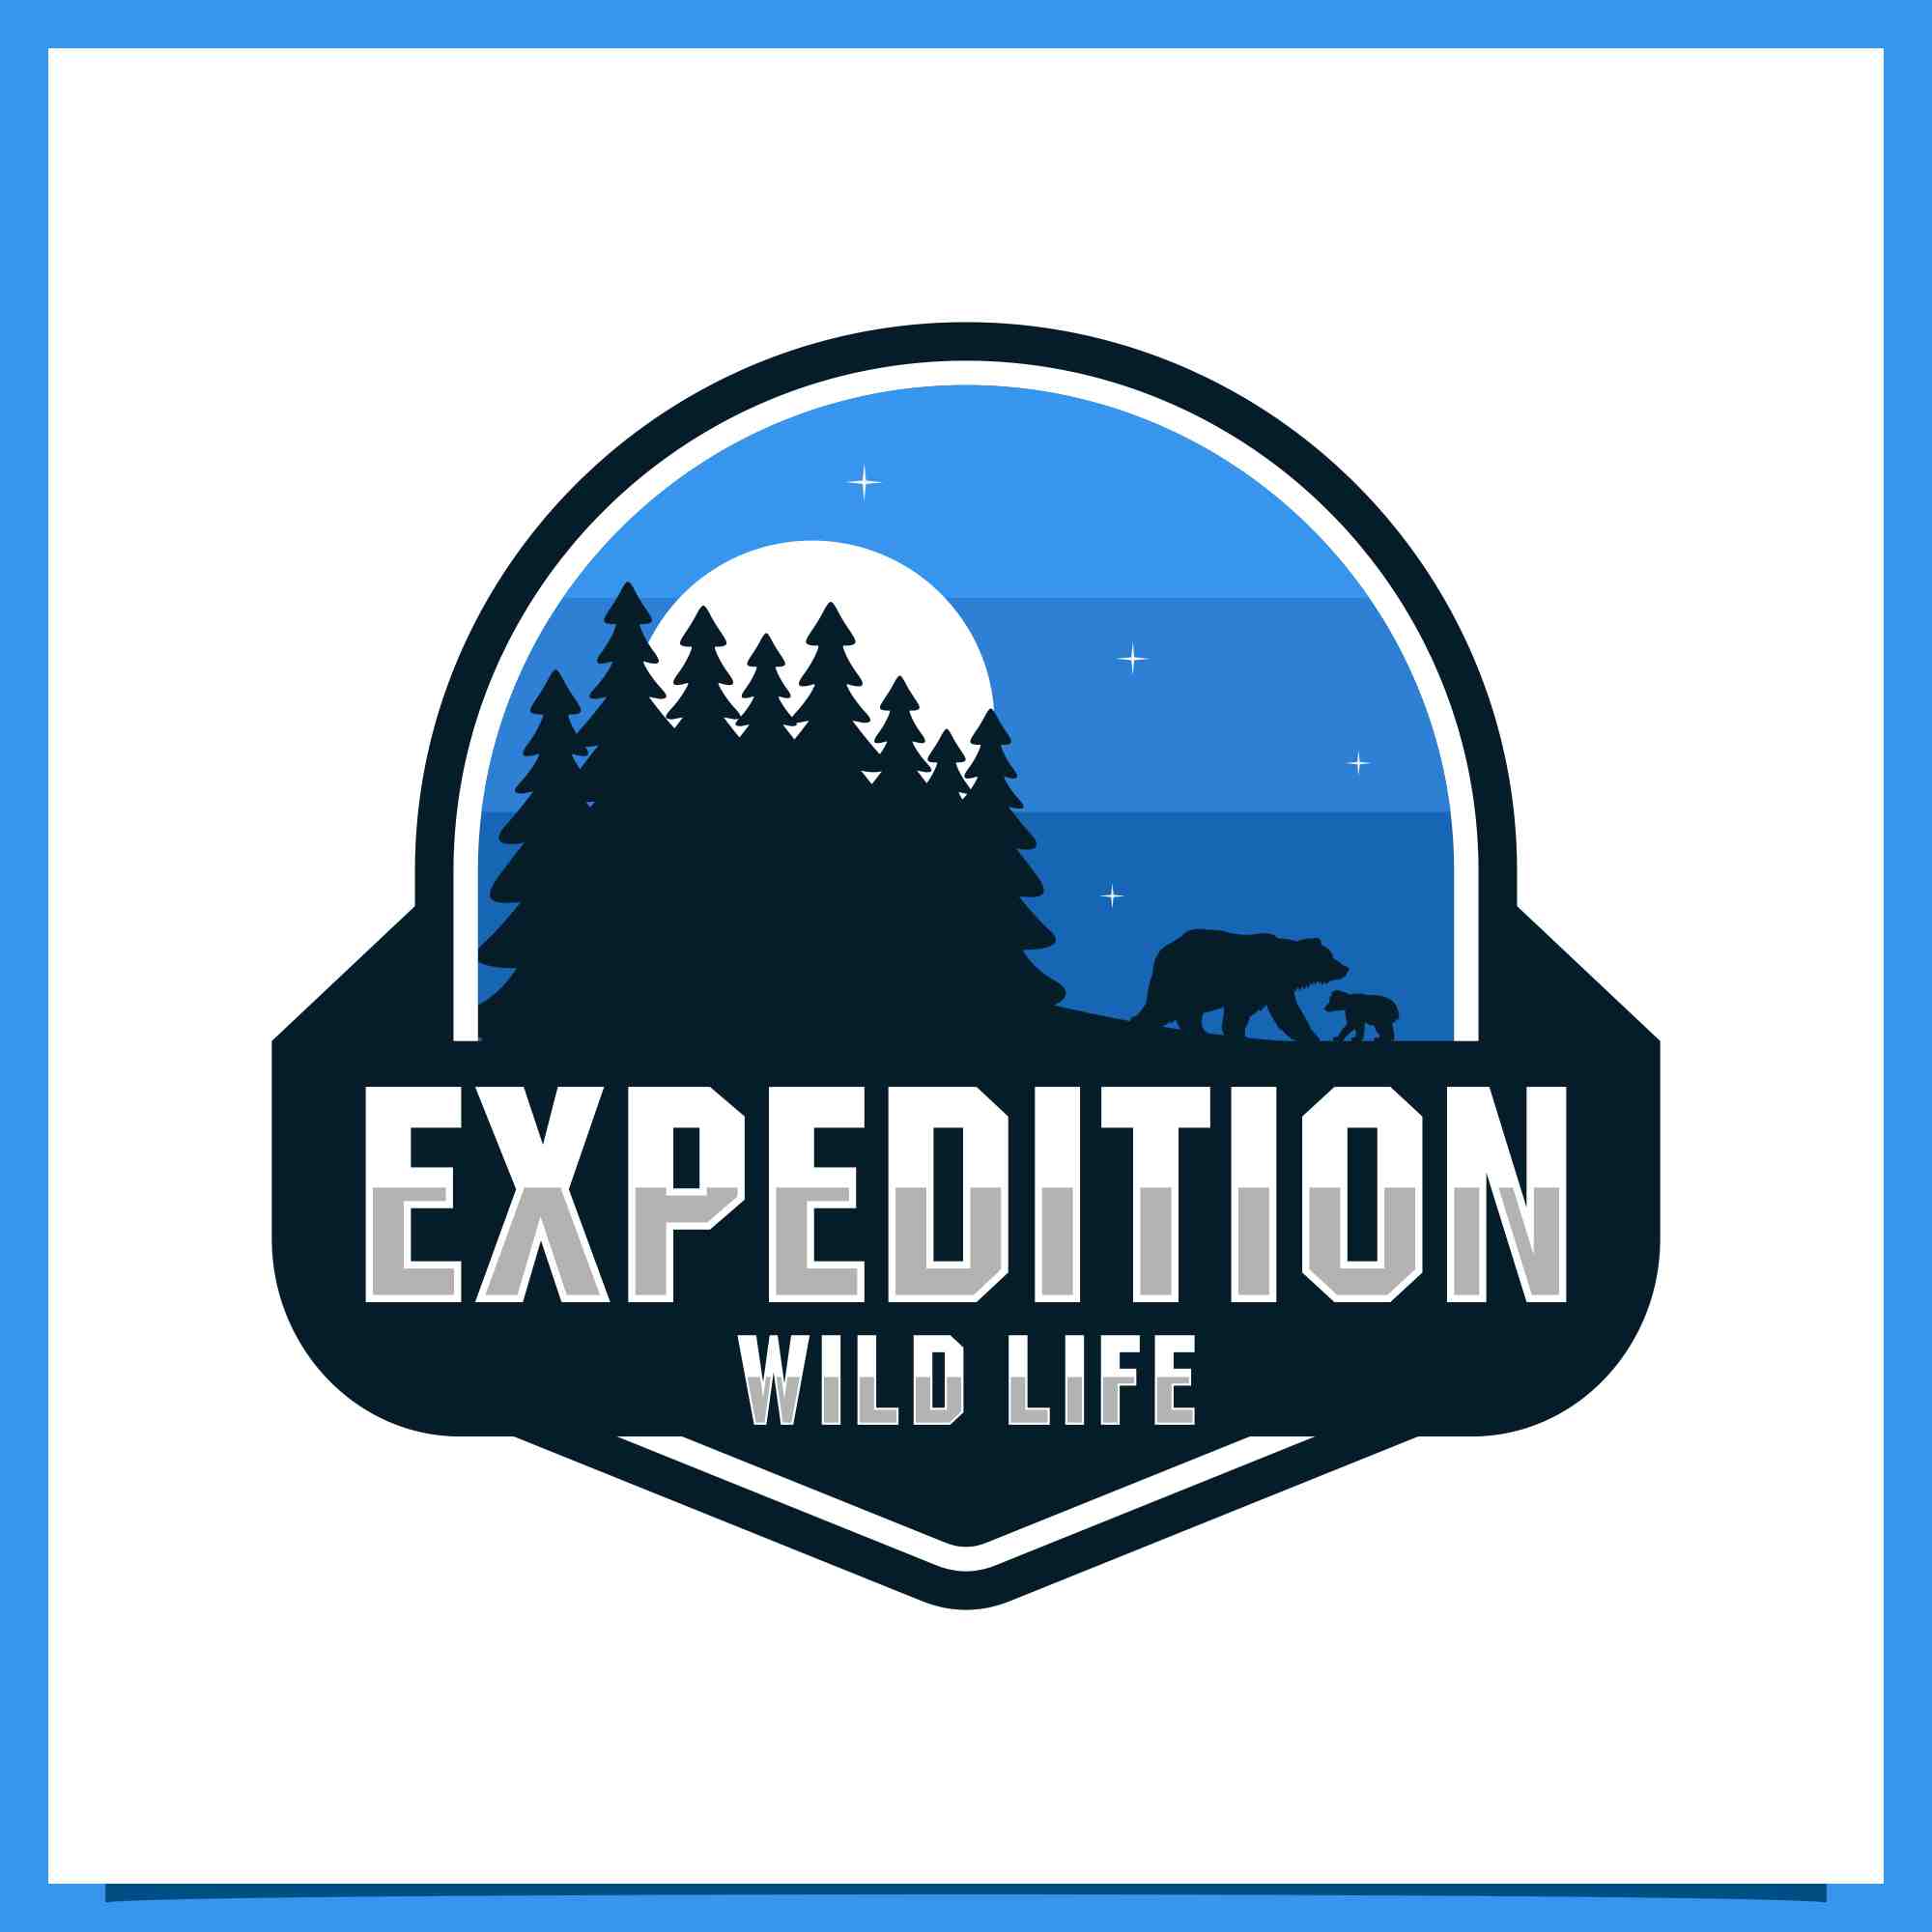 expedition outdoor adventure badge design 3 732